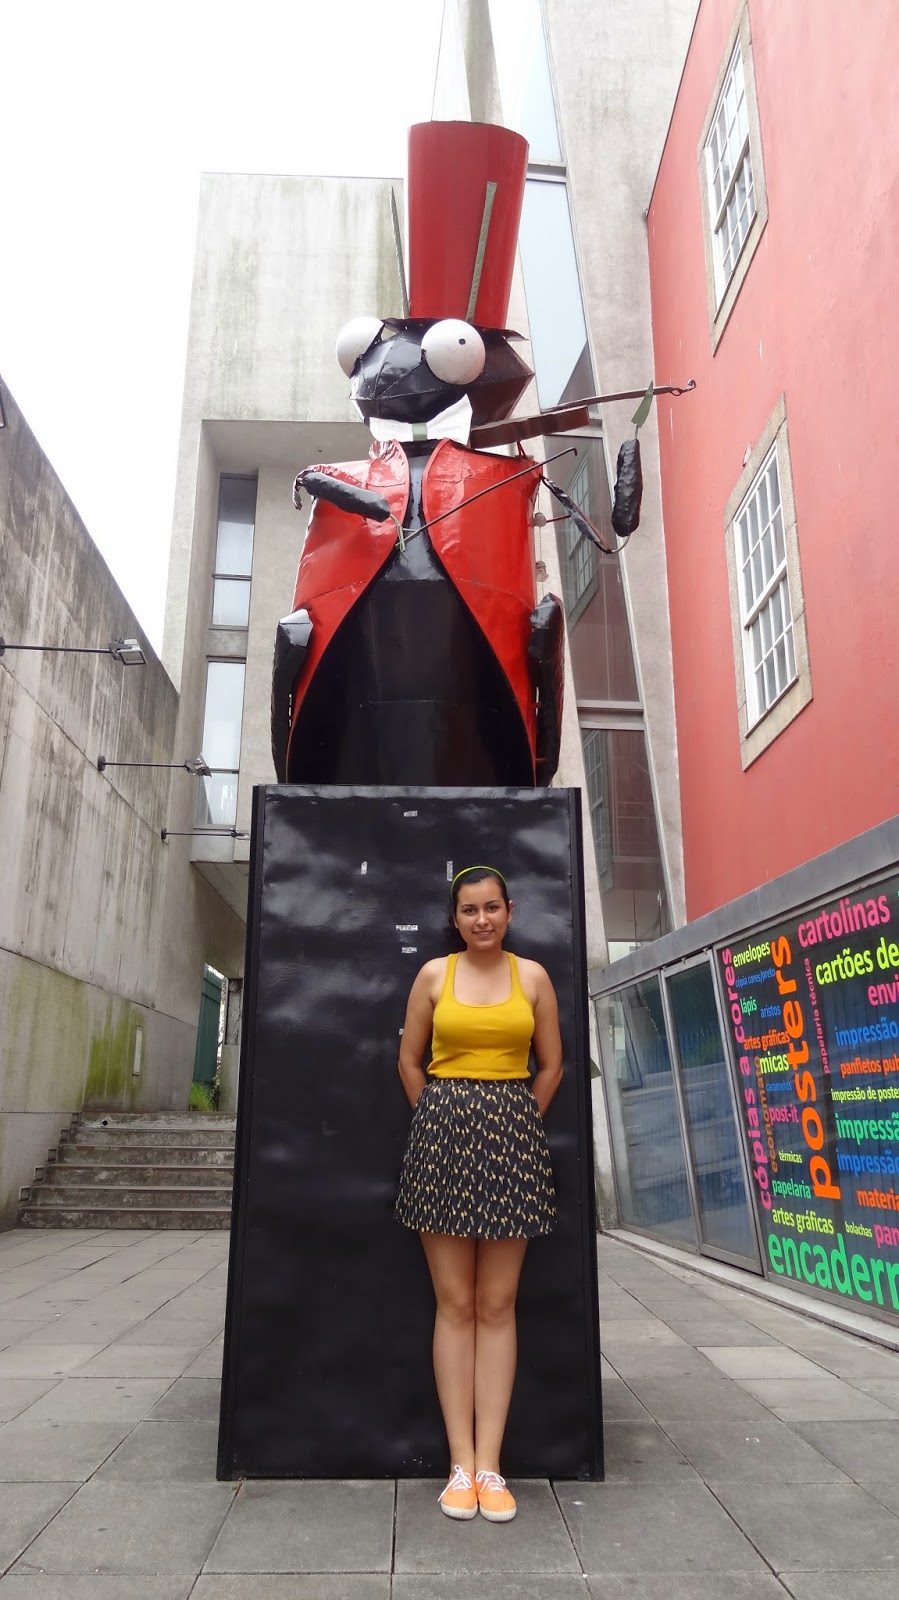 Portuguese travel: Pinapple skirt-479-universos